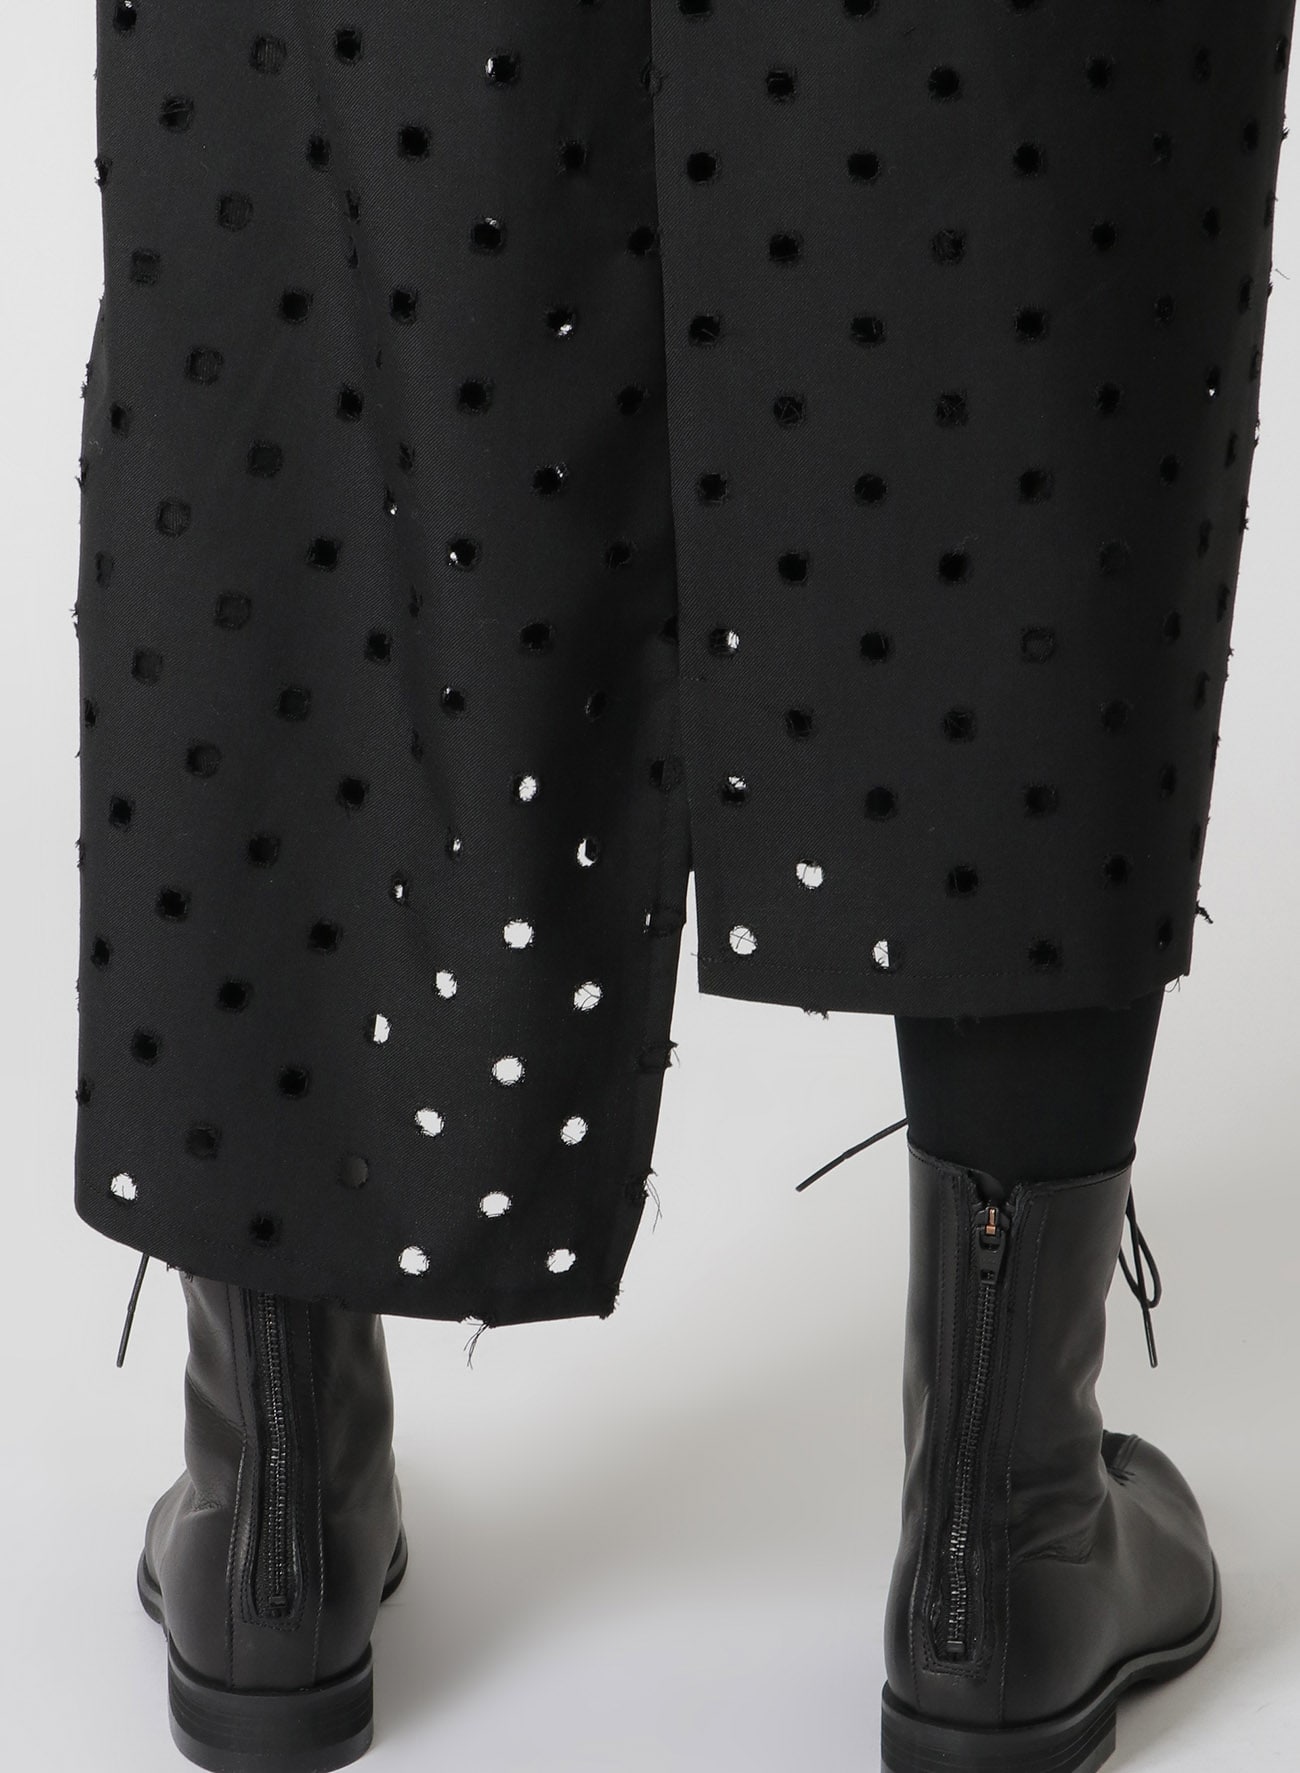 SLEEVELESS KNITTED TURTLENECK DRESS(XS Black): Vintage 1.1｜THE 